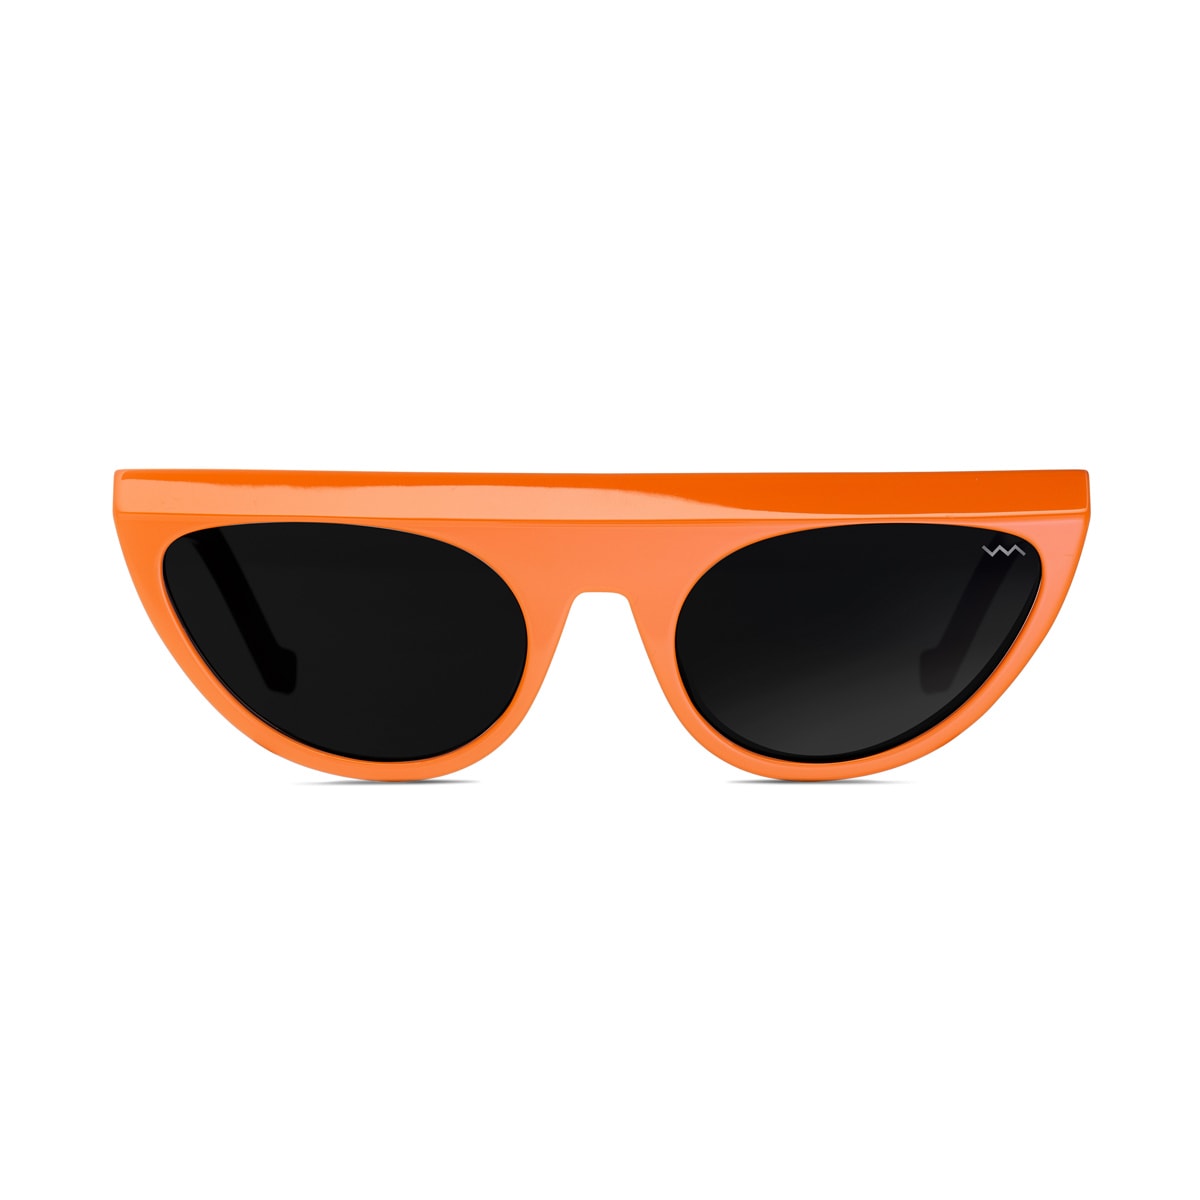 Bl0027 Black Label Orange Sunglasses